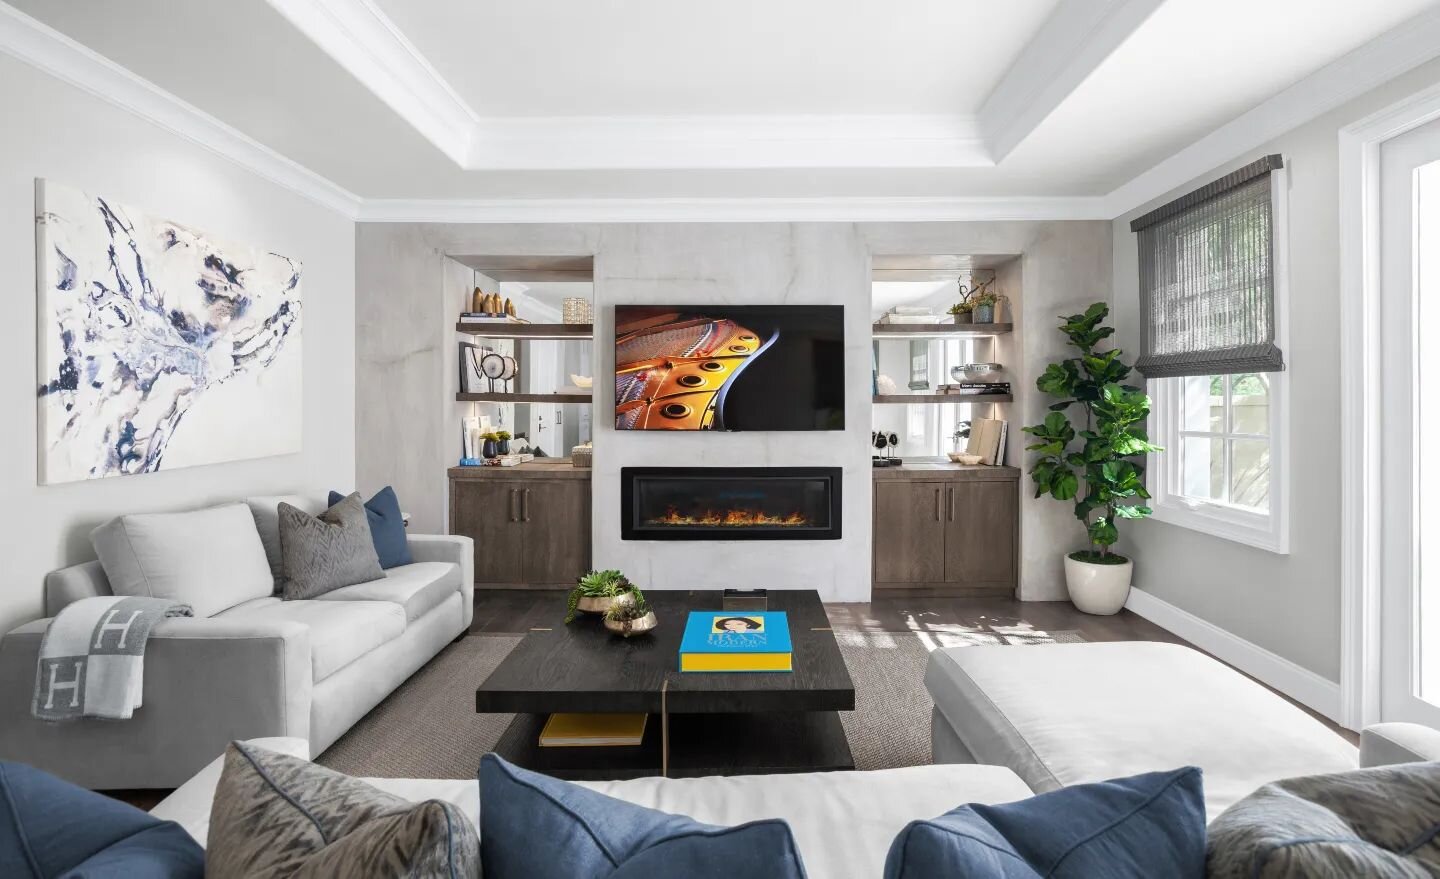 ▪️ Living Room from my project designed by @kouroshbabaeian @kbstudio.la